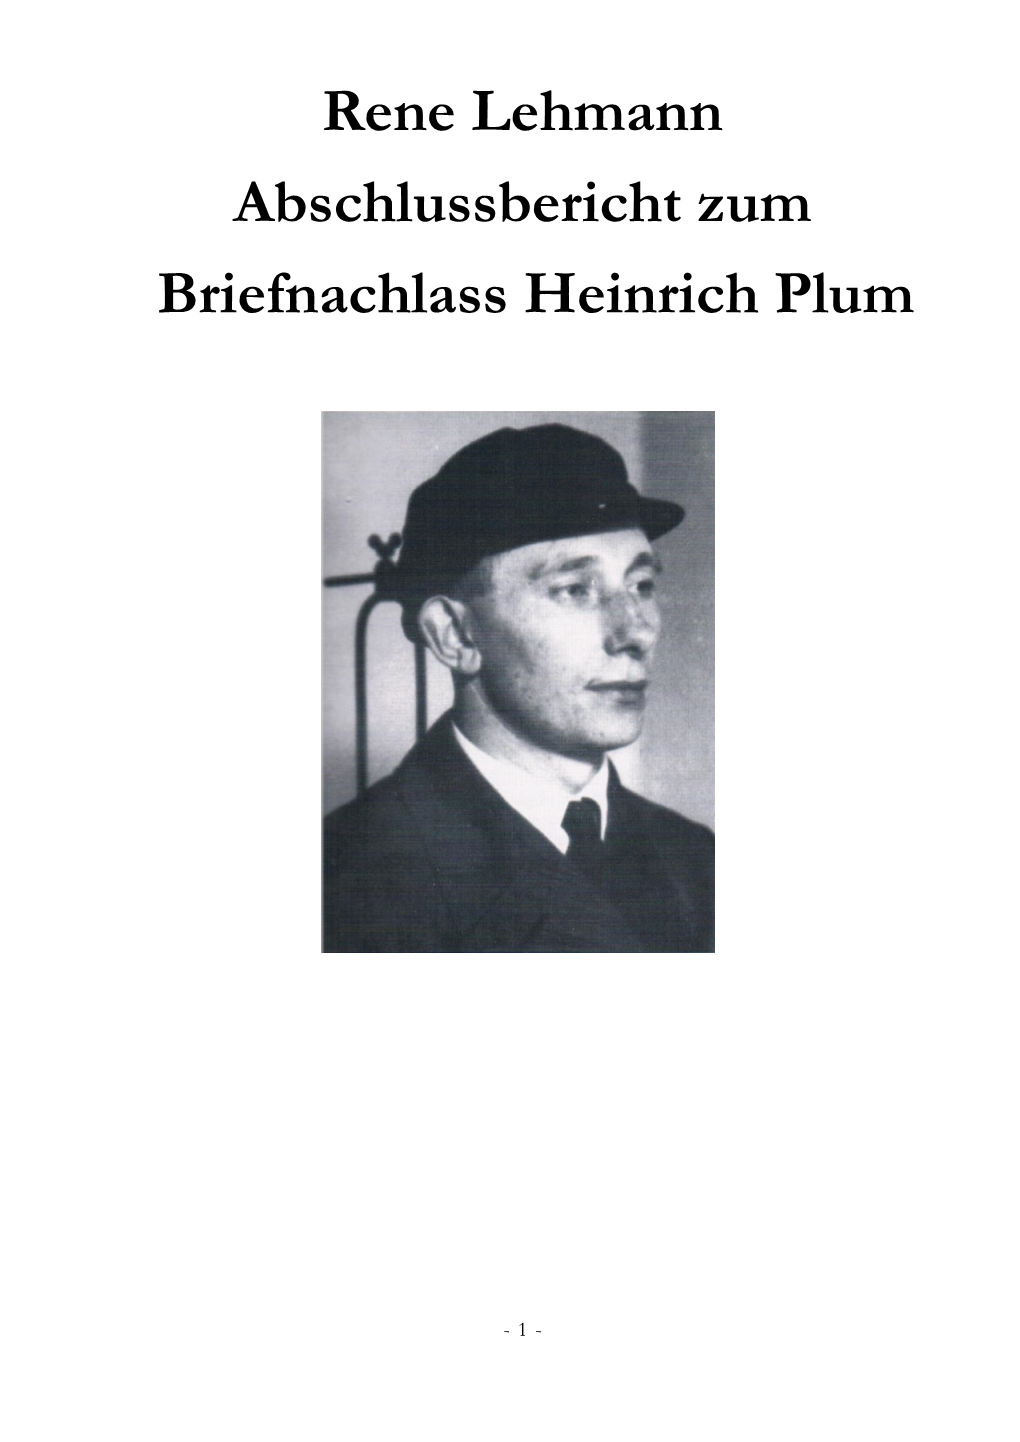 Abbschlussbericht Heinrich Plum Word Export